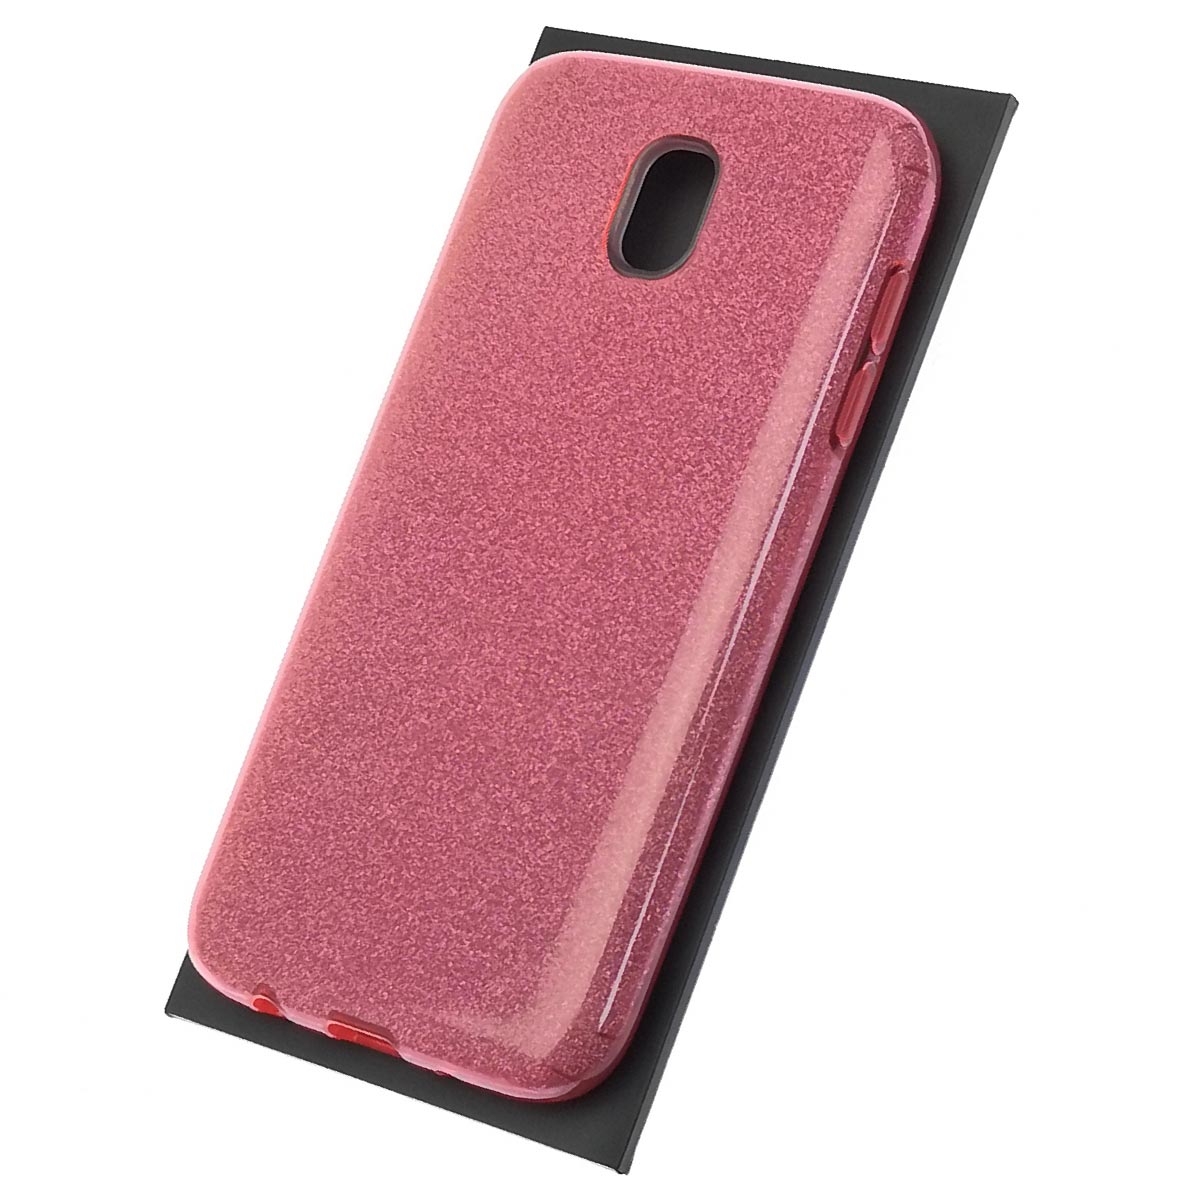 Чехол накладка для SAMSUNG Galaxy J5 2017 (SM-J530), силикон, блестки, цвет розовый